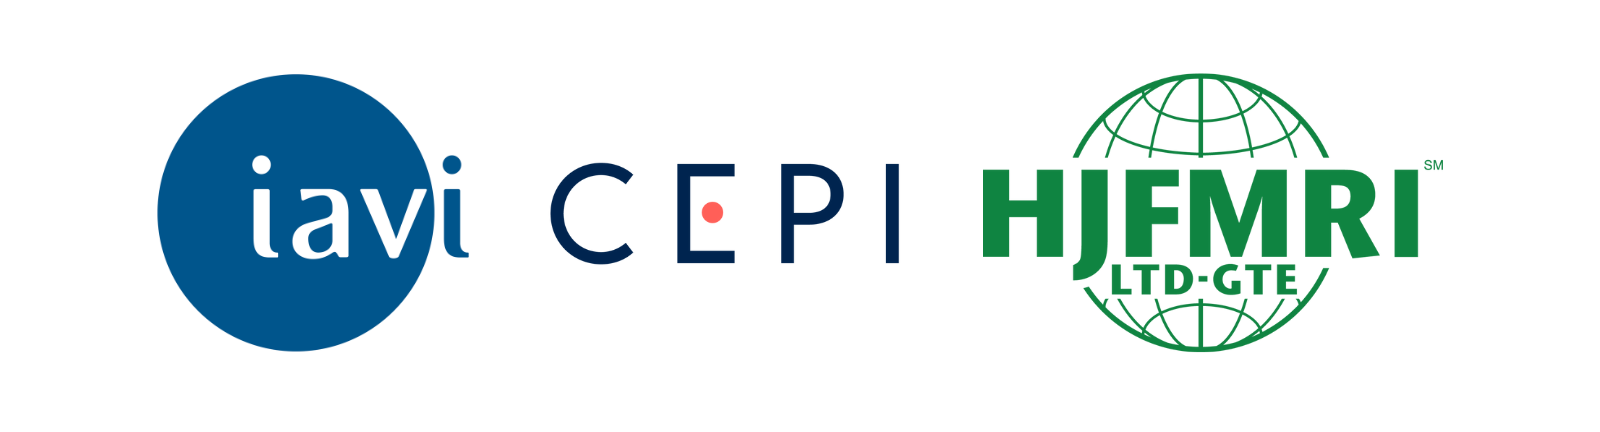 IAVI, CEPI, and HJFMRI logos